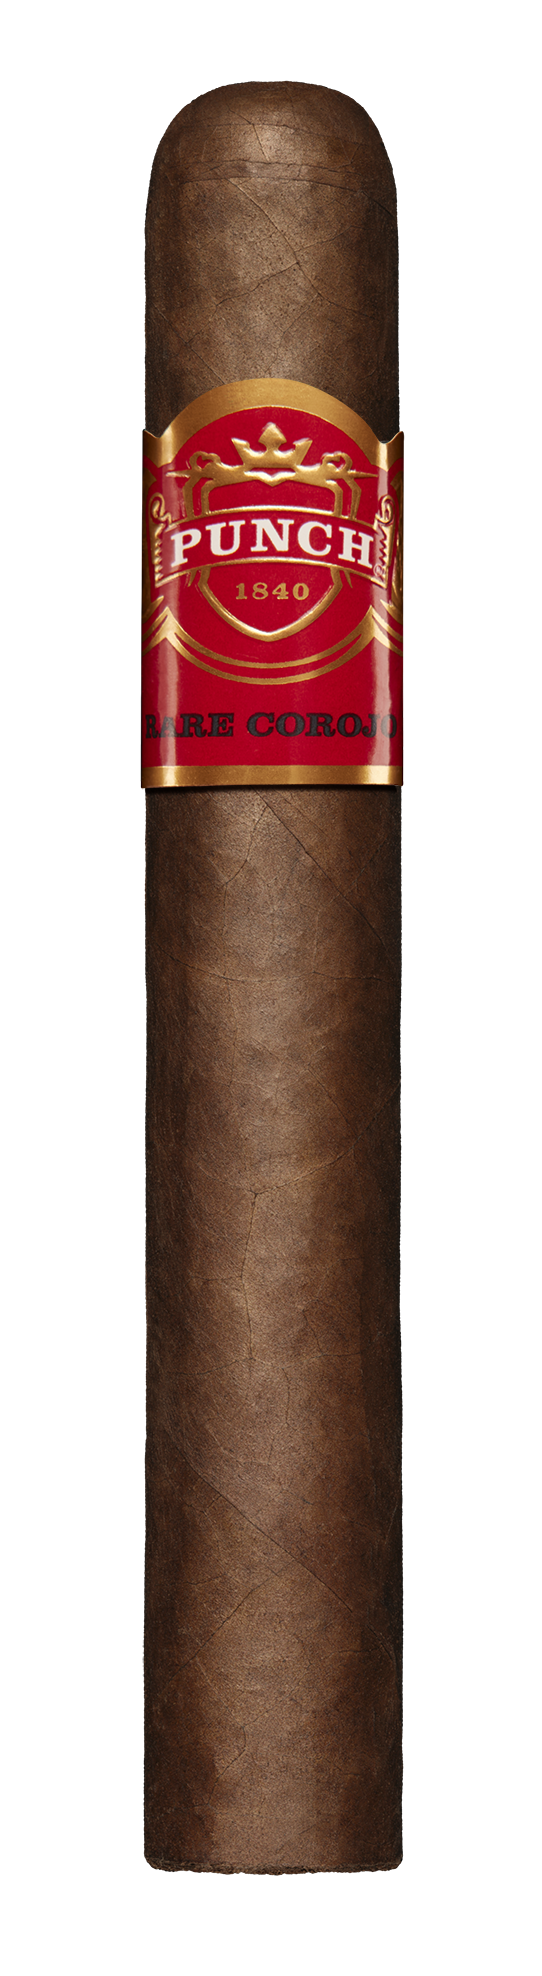 Punch_Rare Corojo_cigar